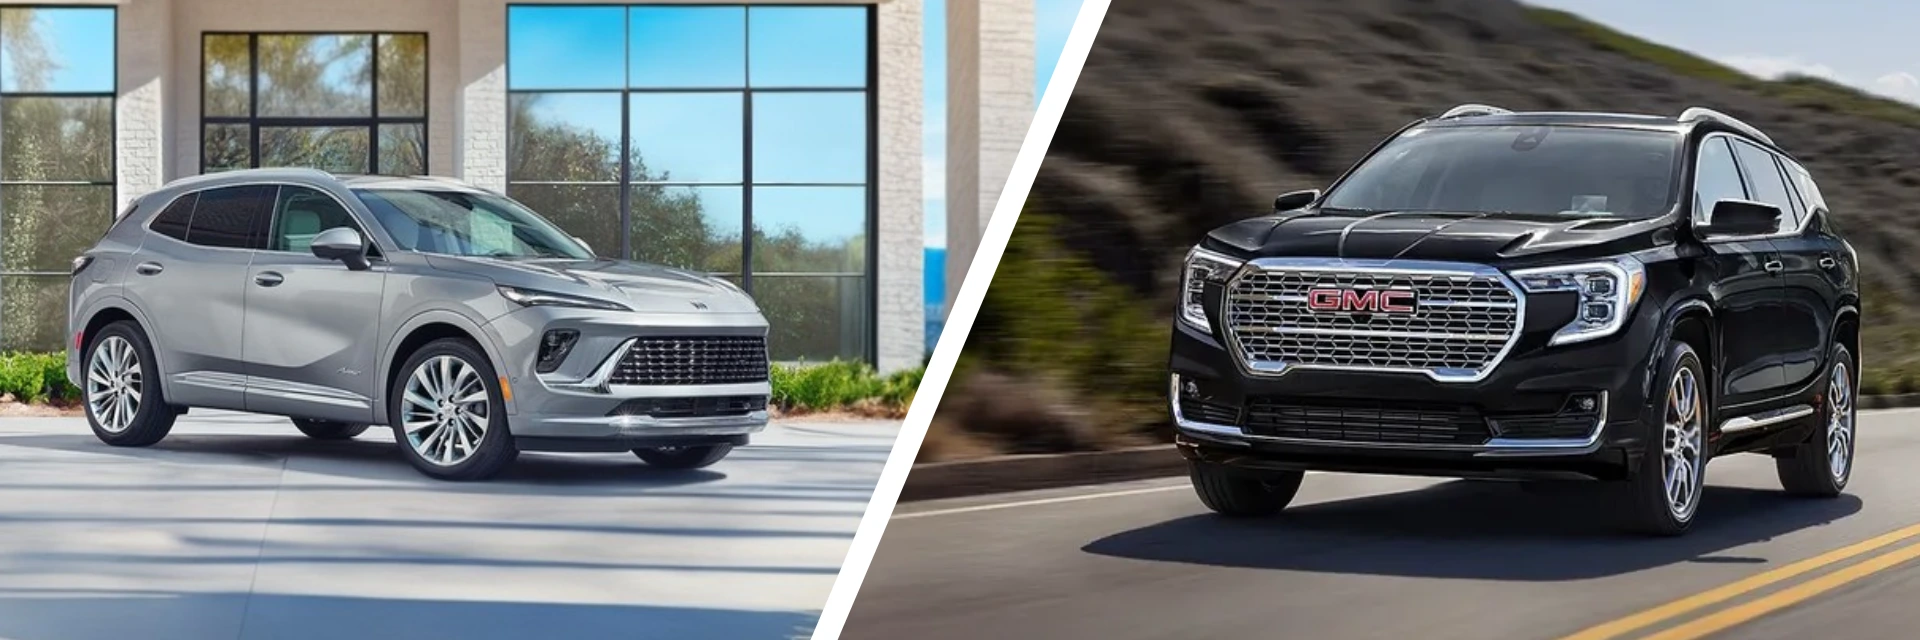 Buick Envision vs GMC Terrain